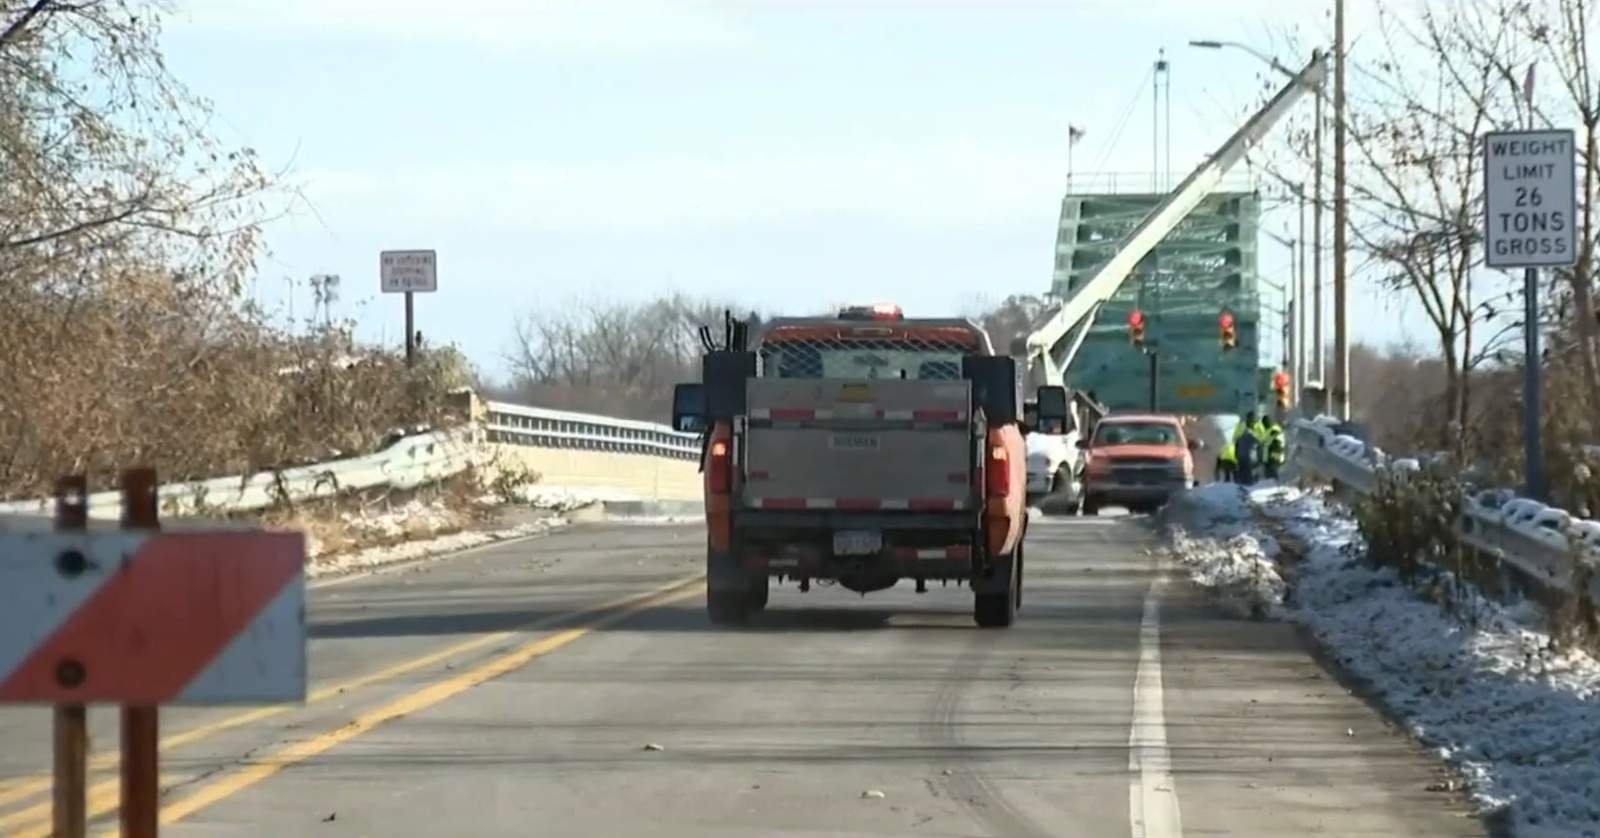 Grosse Ile Parkway Bridge to close this summer for repairs